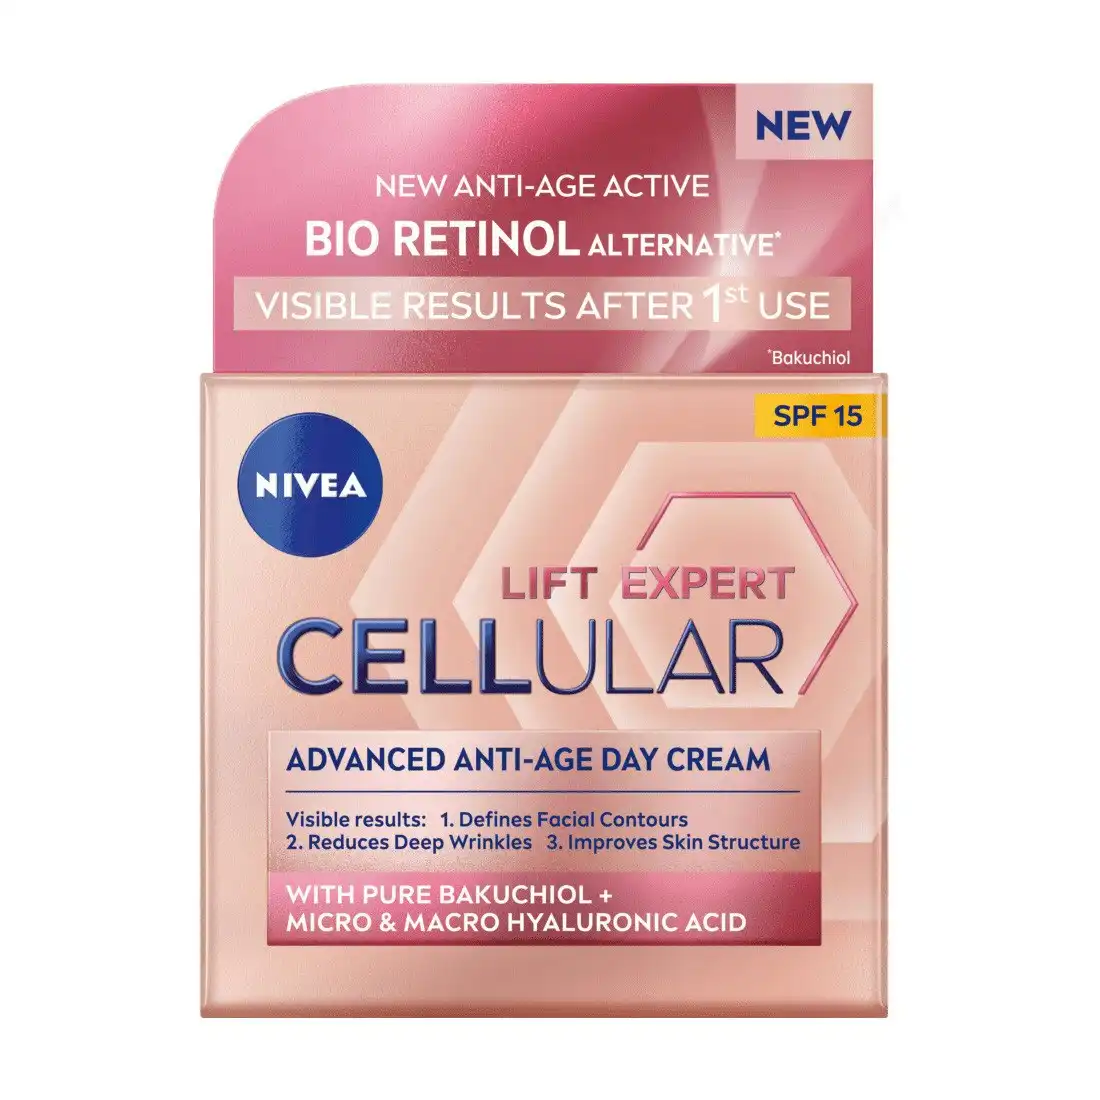 Nivea Cellular Lift Expert Advanced Anti-Age Day Cream SPF15